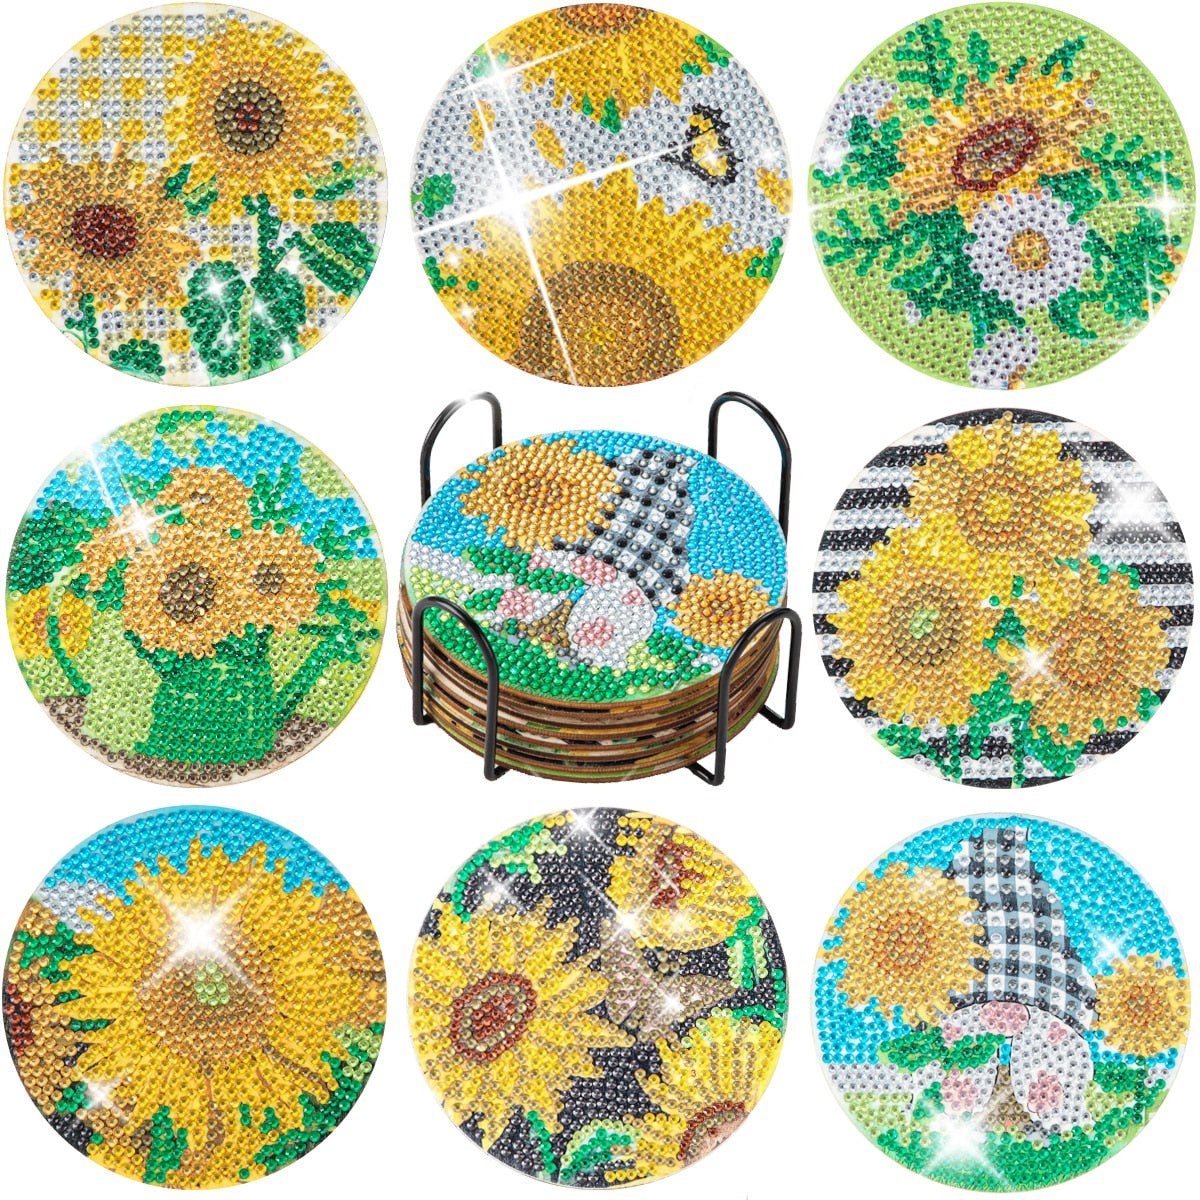 8pc/Sets Diamond Painting Coasters Kits With Holder - Sunflowers